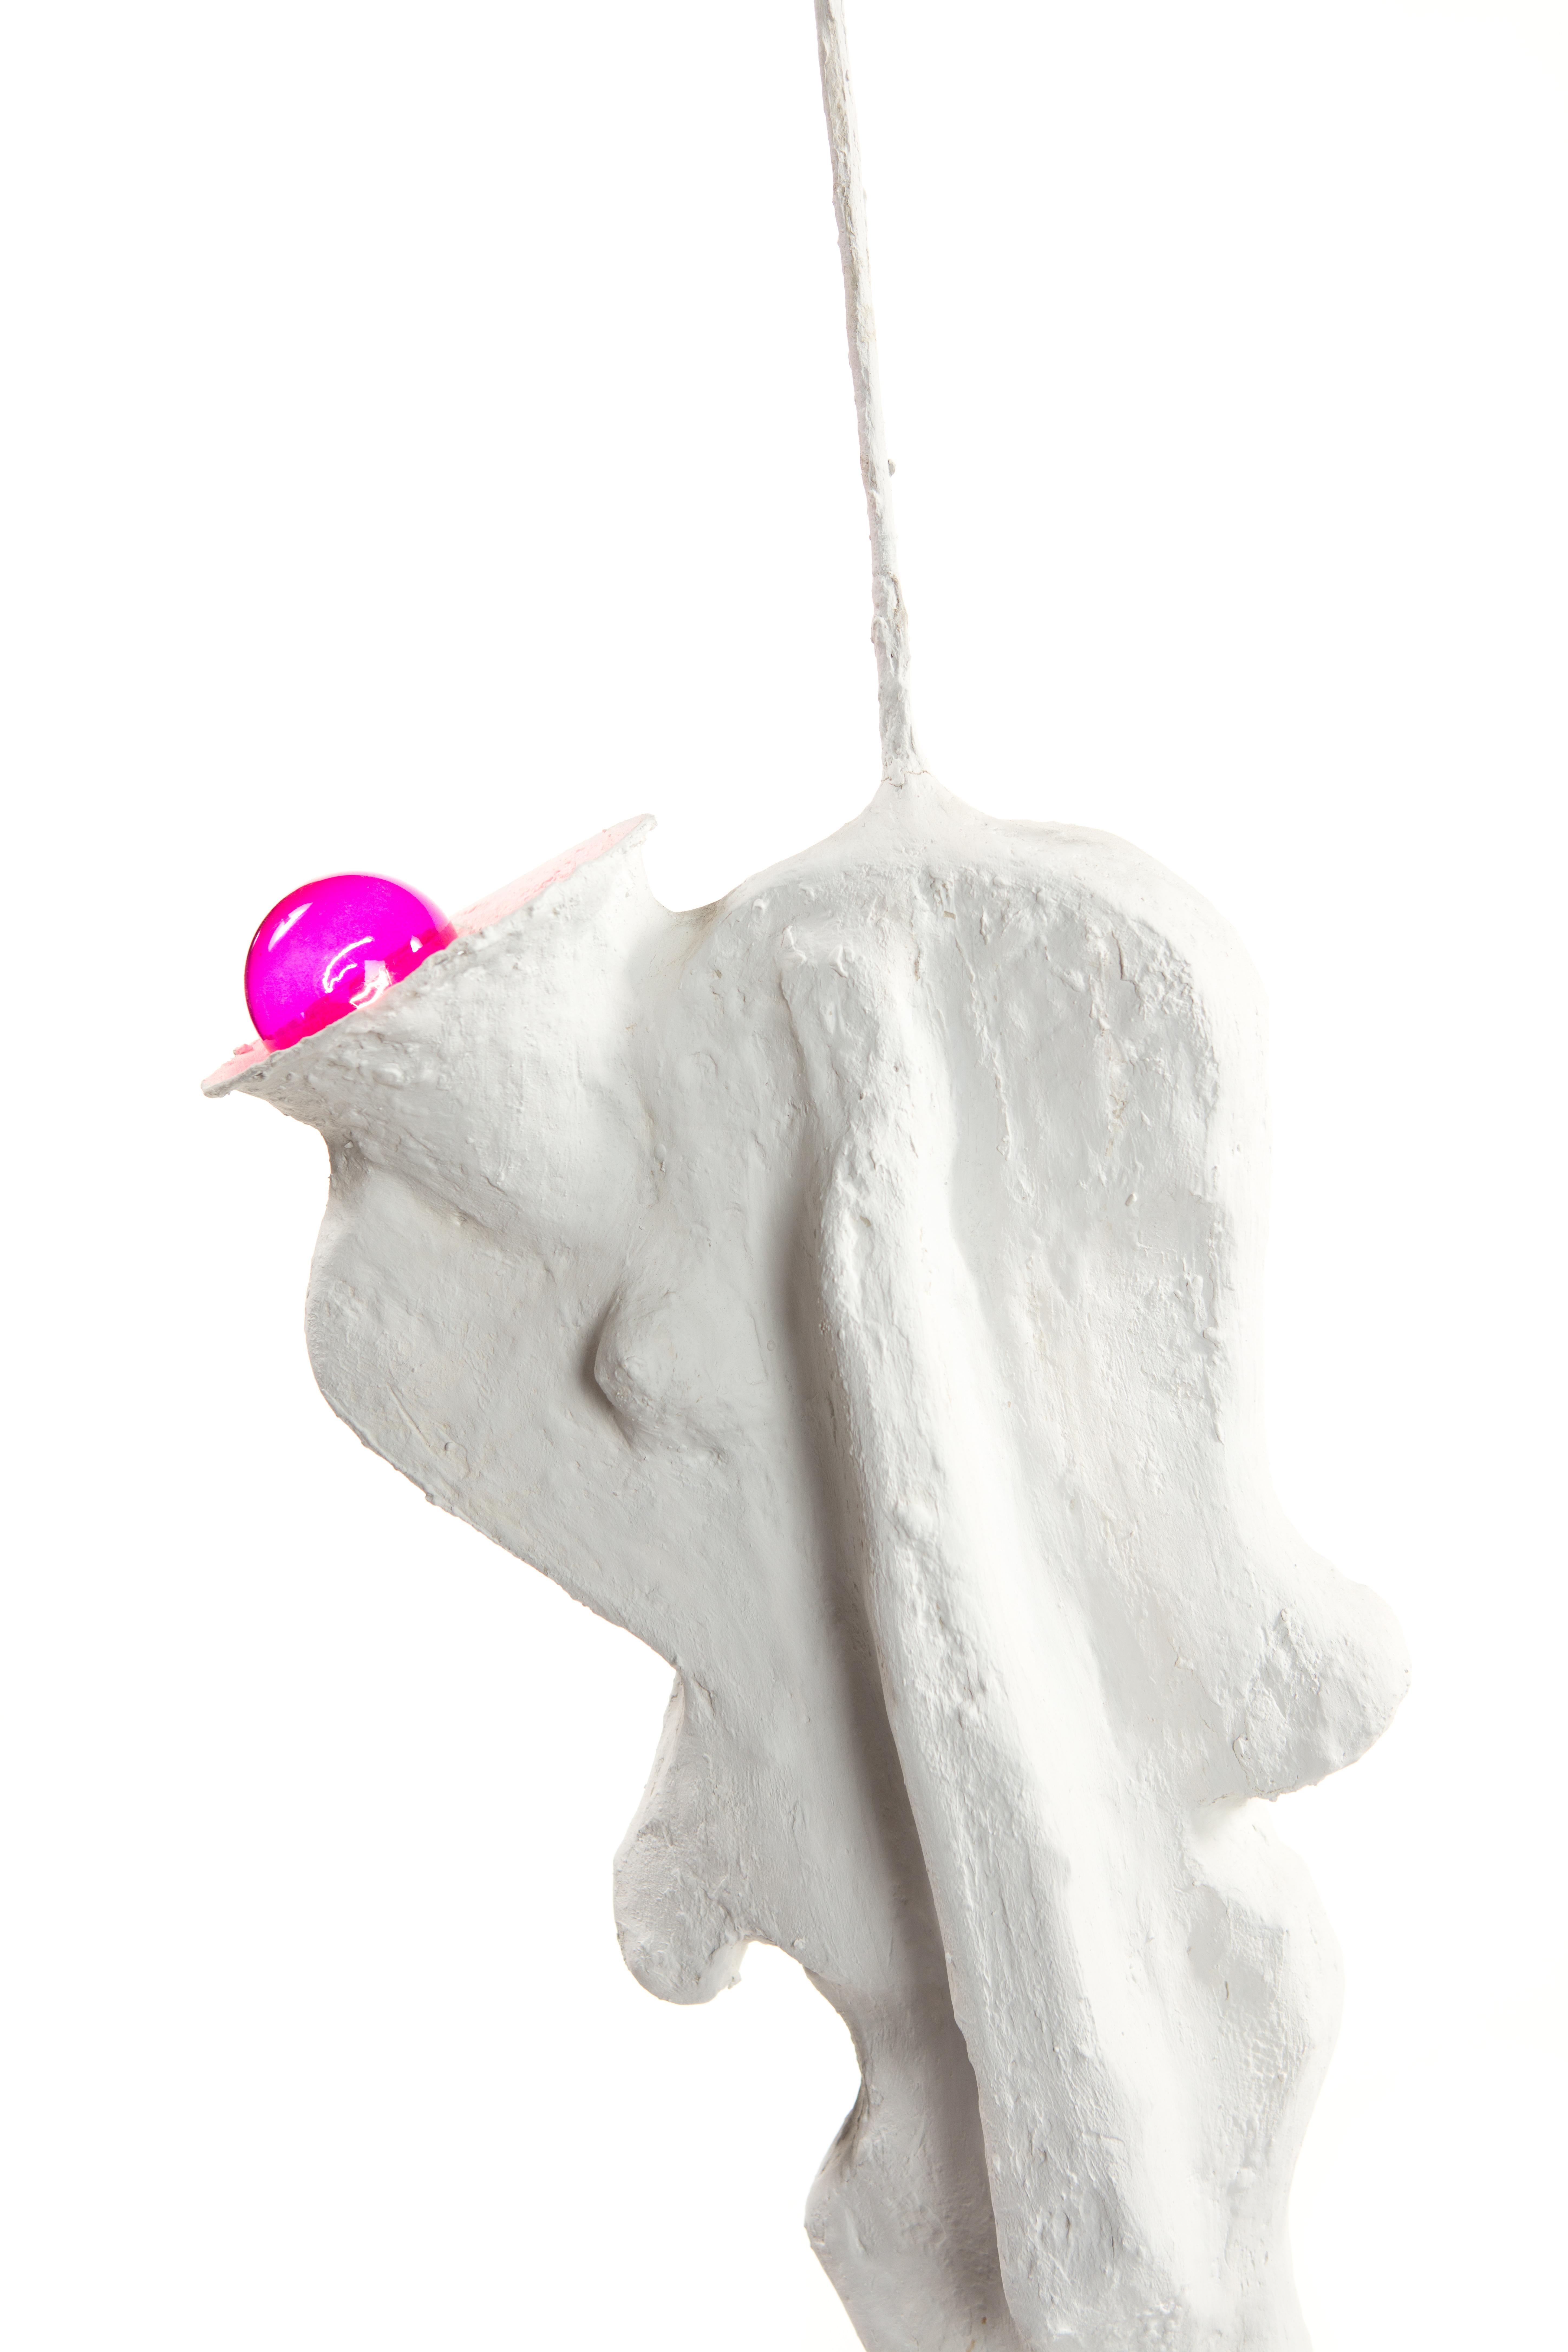 White Plaster Sculptural Table Lamp, 21st Century by Mattia Biagi For Sale 7